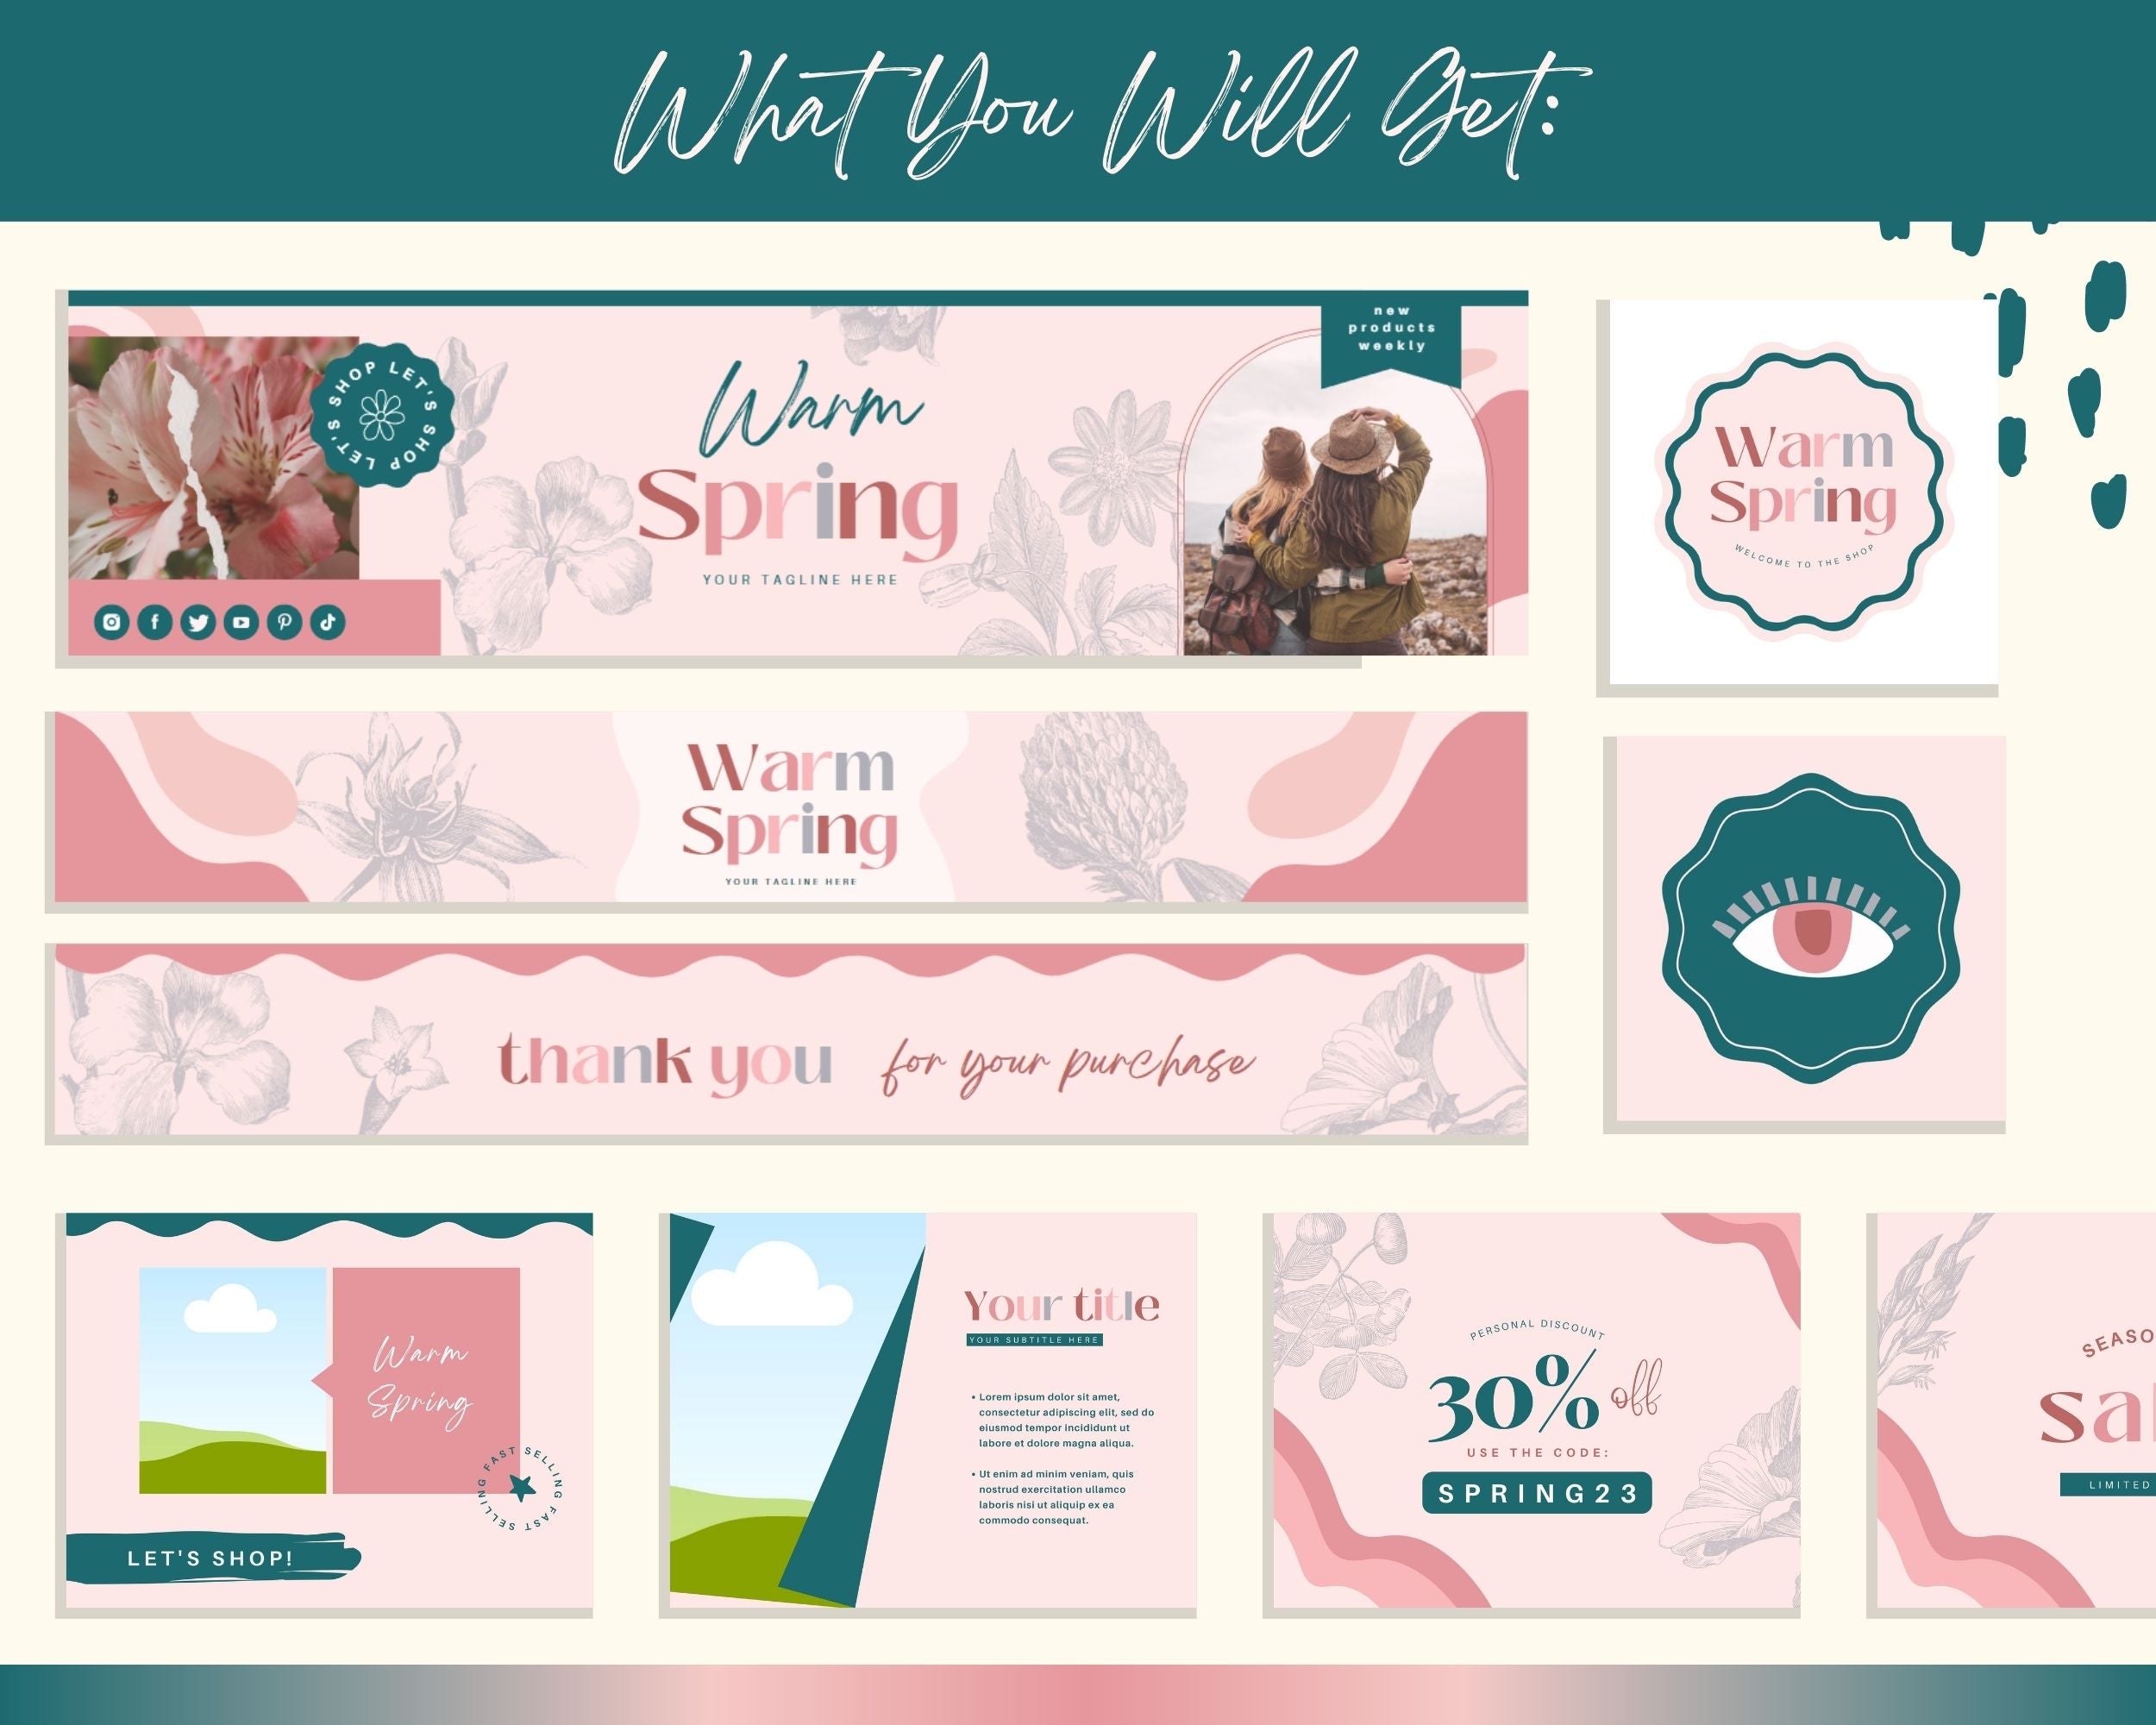 Pinkish Spring Etsy Shop Banner Kit | Etsy Banner Canva Templates | Etsy Store Listing Design | Bright Etsy Branding | Etsy Success Kit